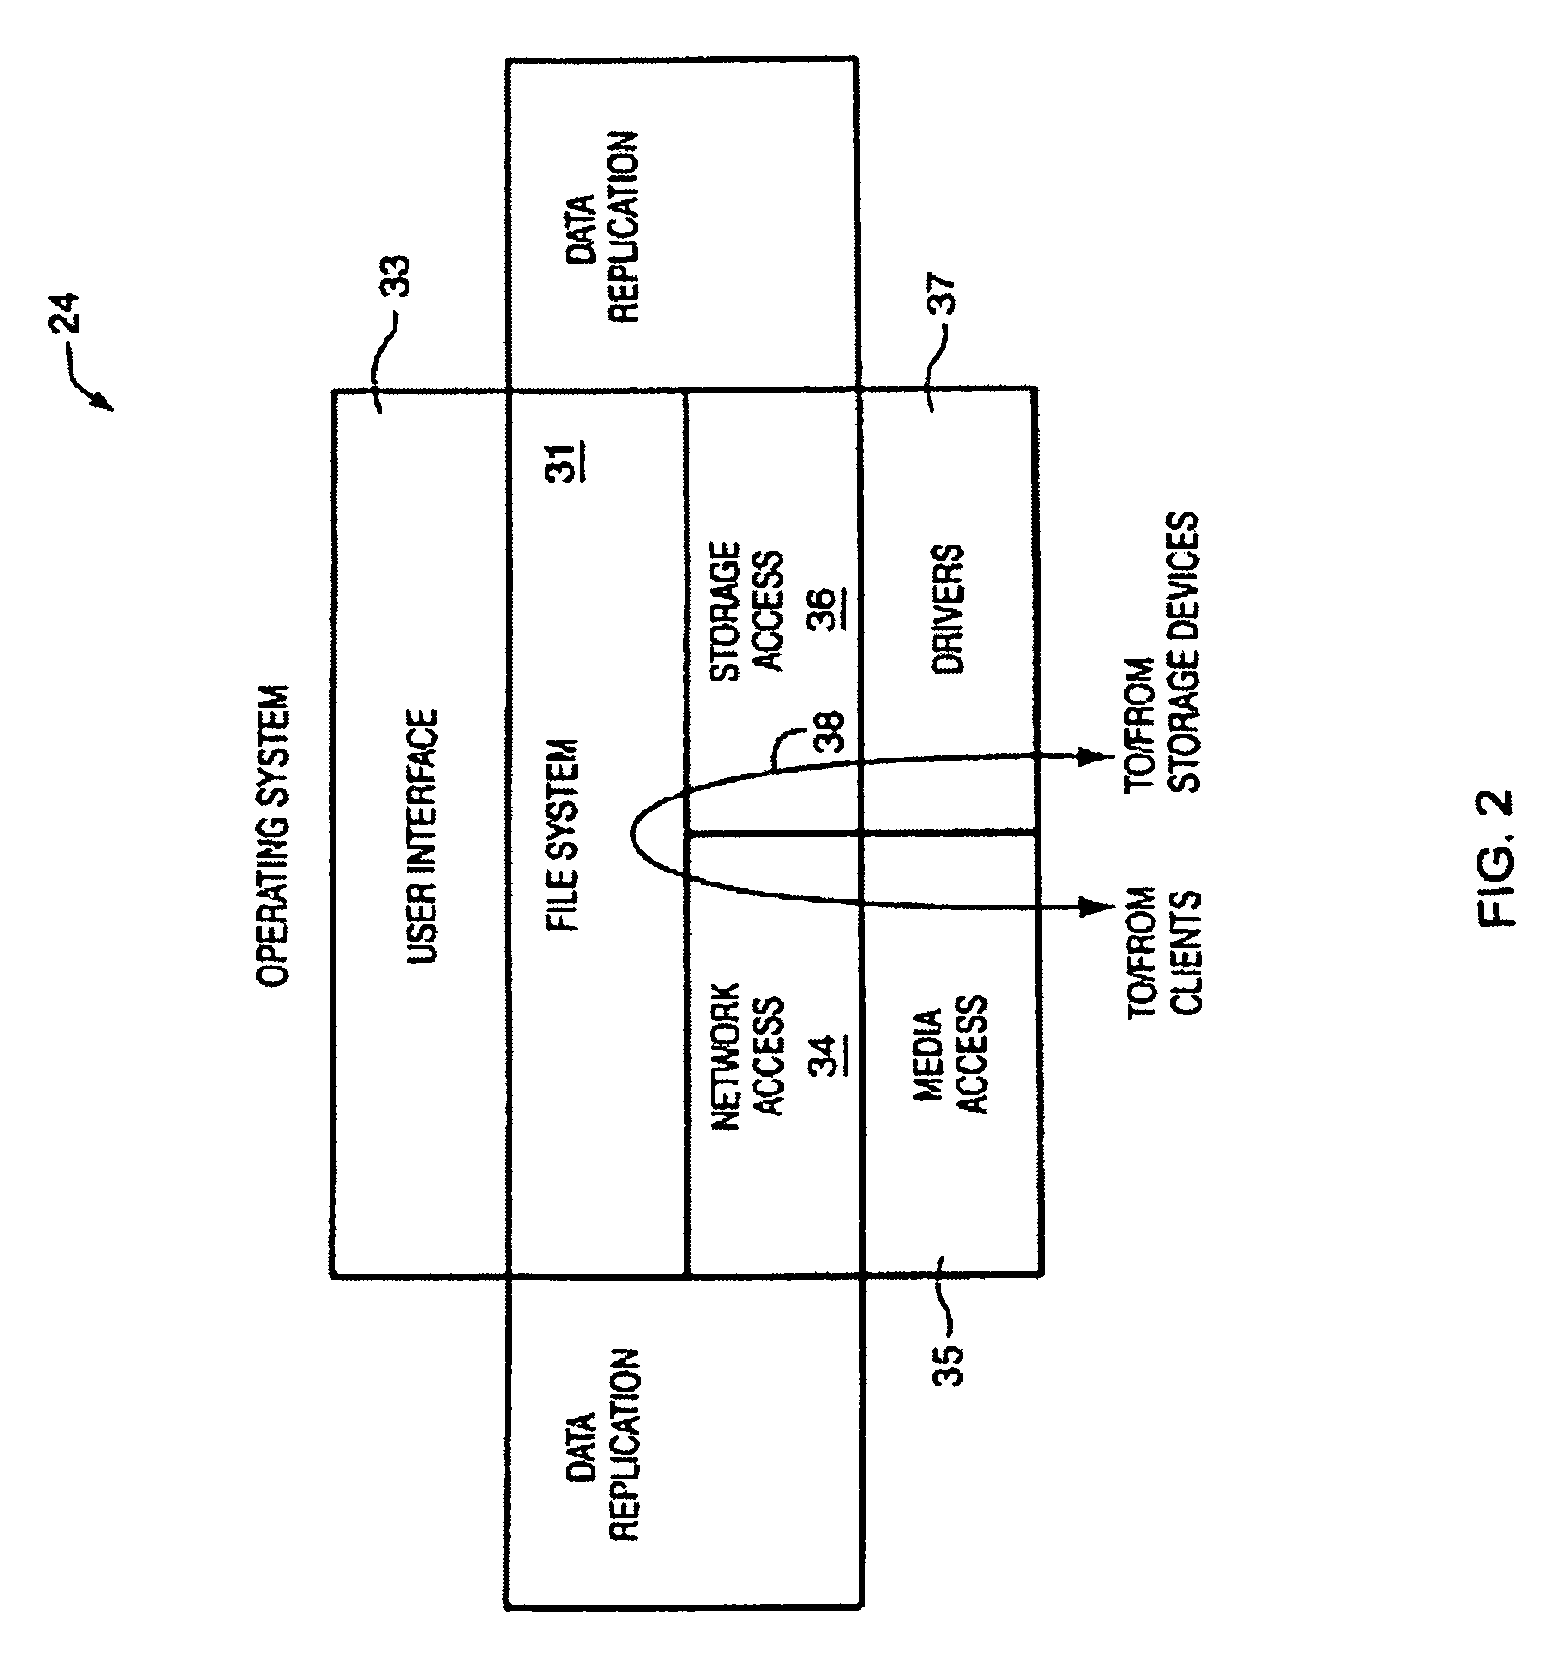 Multi-protocol network adapter